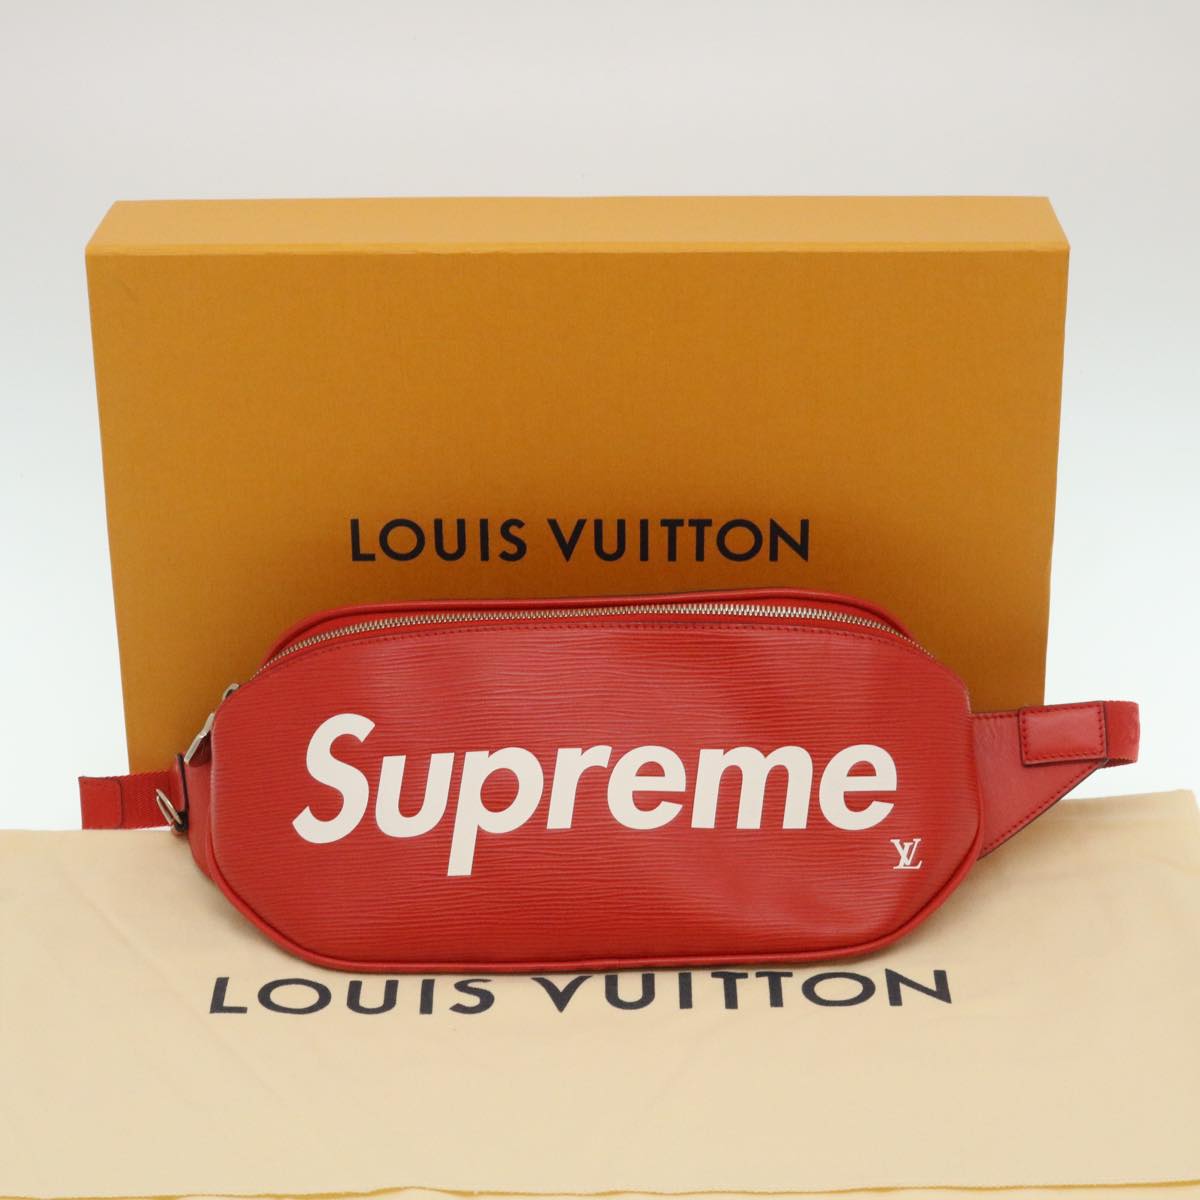 LOUIS VUITTON x Supreme Epi Bum bag Body Bag Red M53418 LV Auth